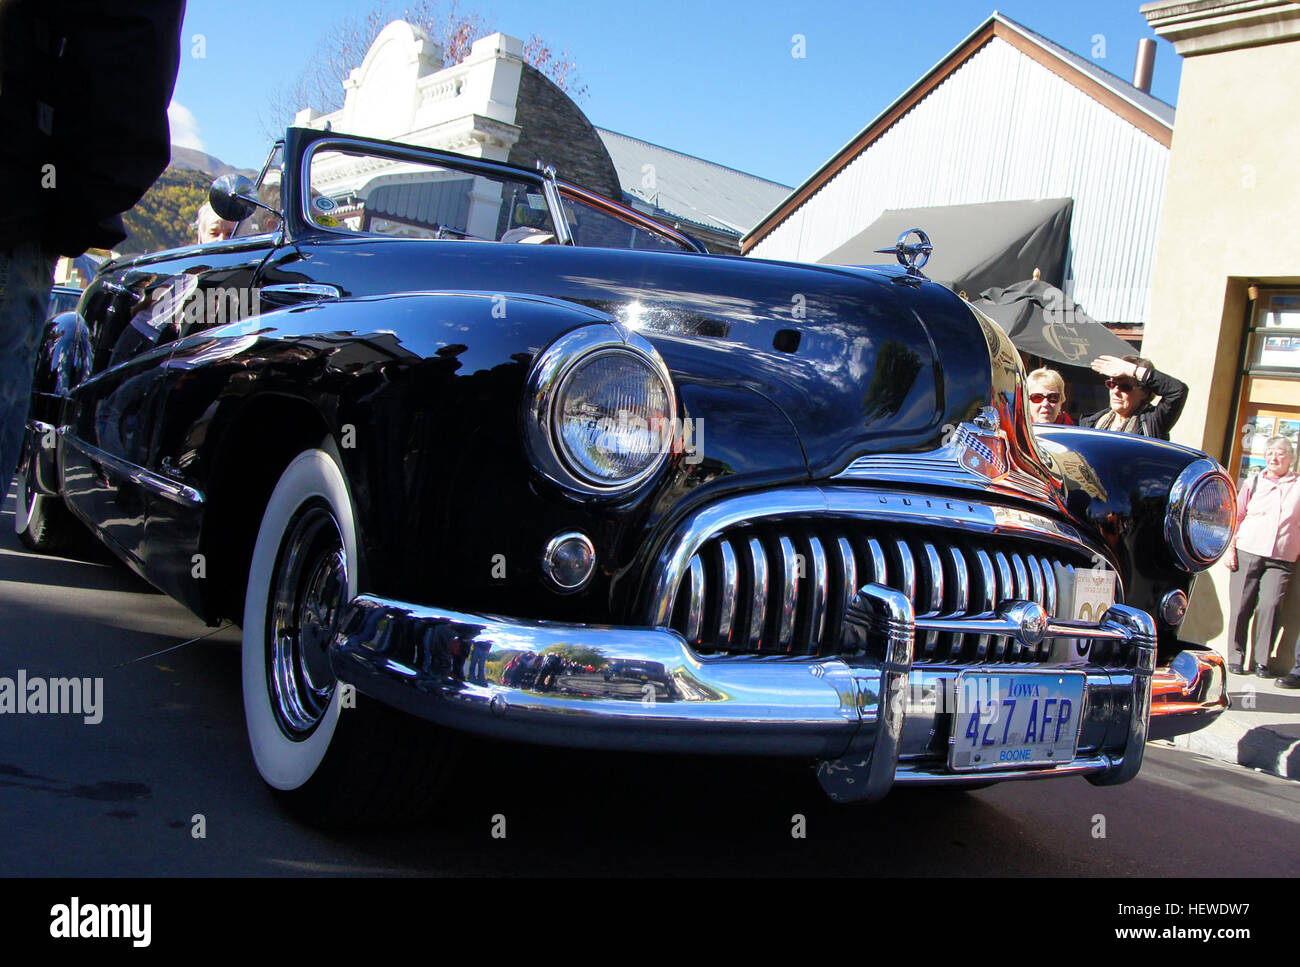 Auto Shows,Autumn festivel Arrowtown,Buick,Car Show,Car parade,Cars,Classic Cars,Vintage cars,Vintange Car Clubs,cars restored Stock Photo